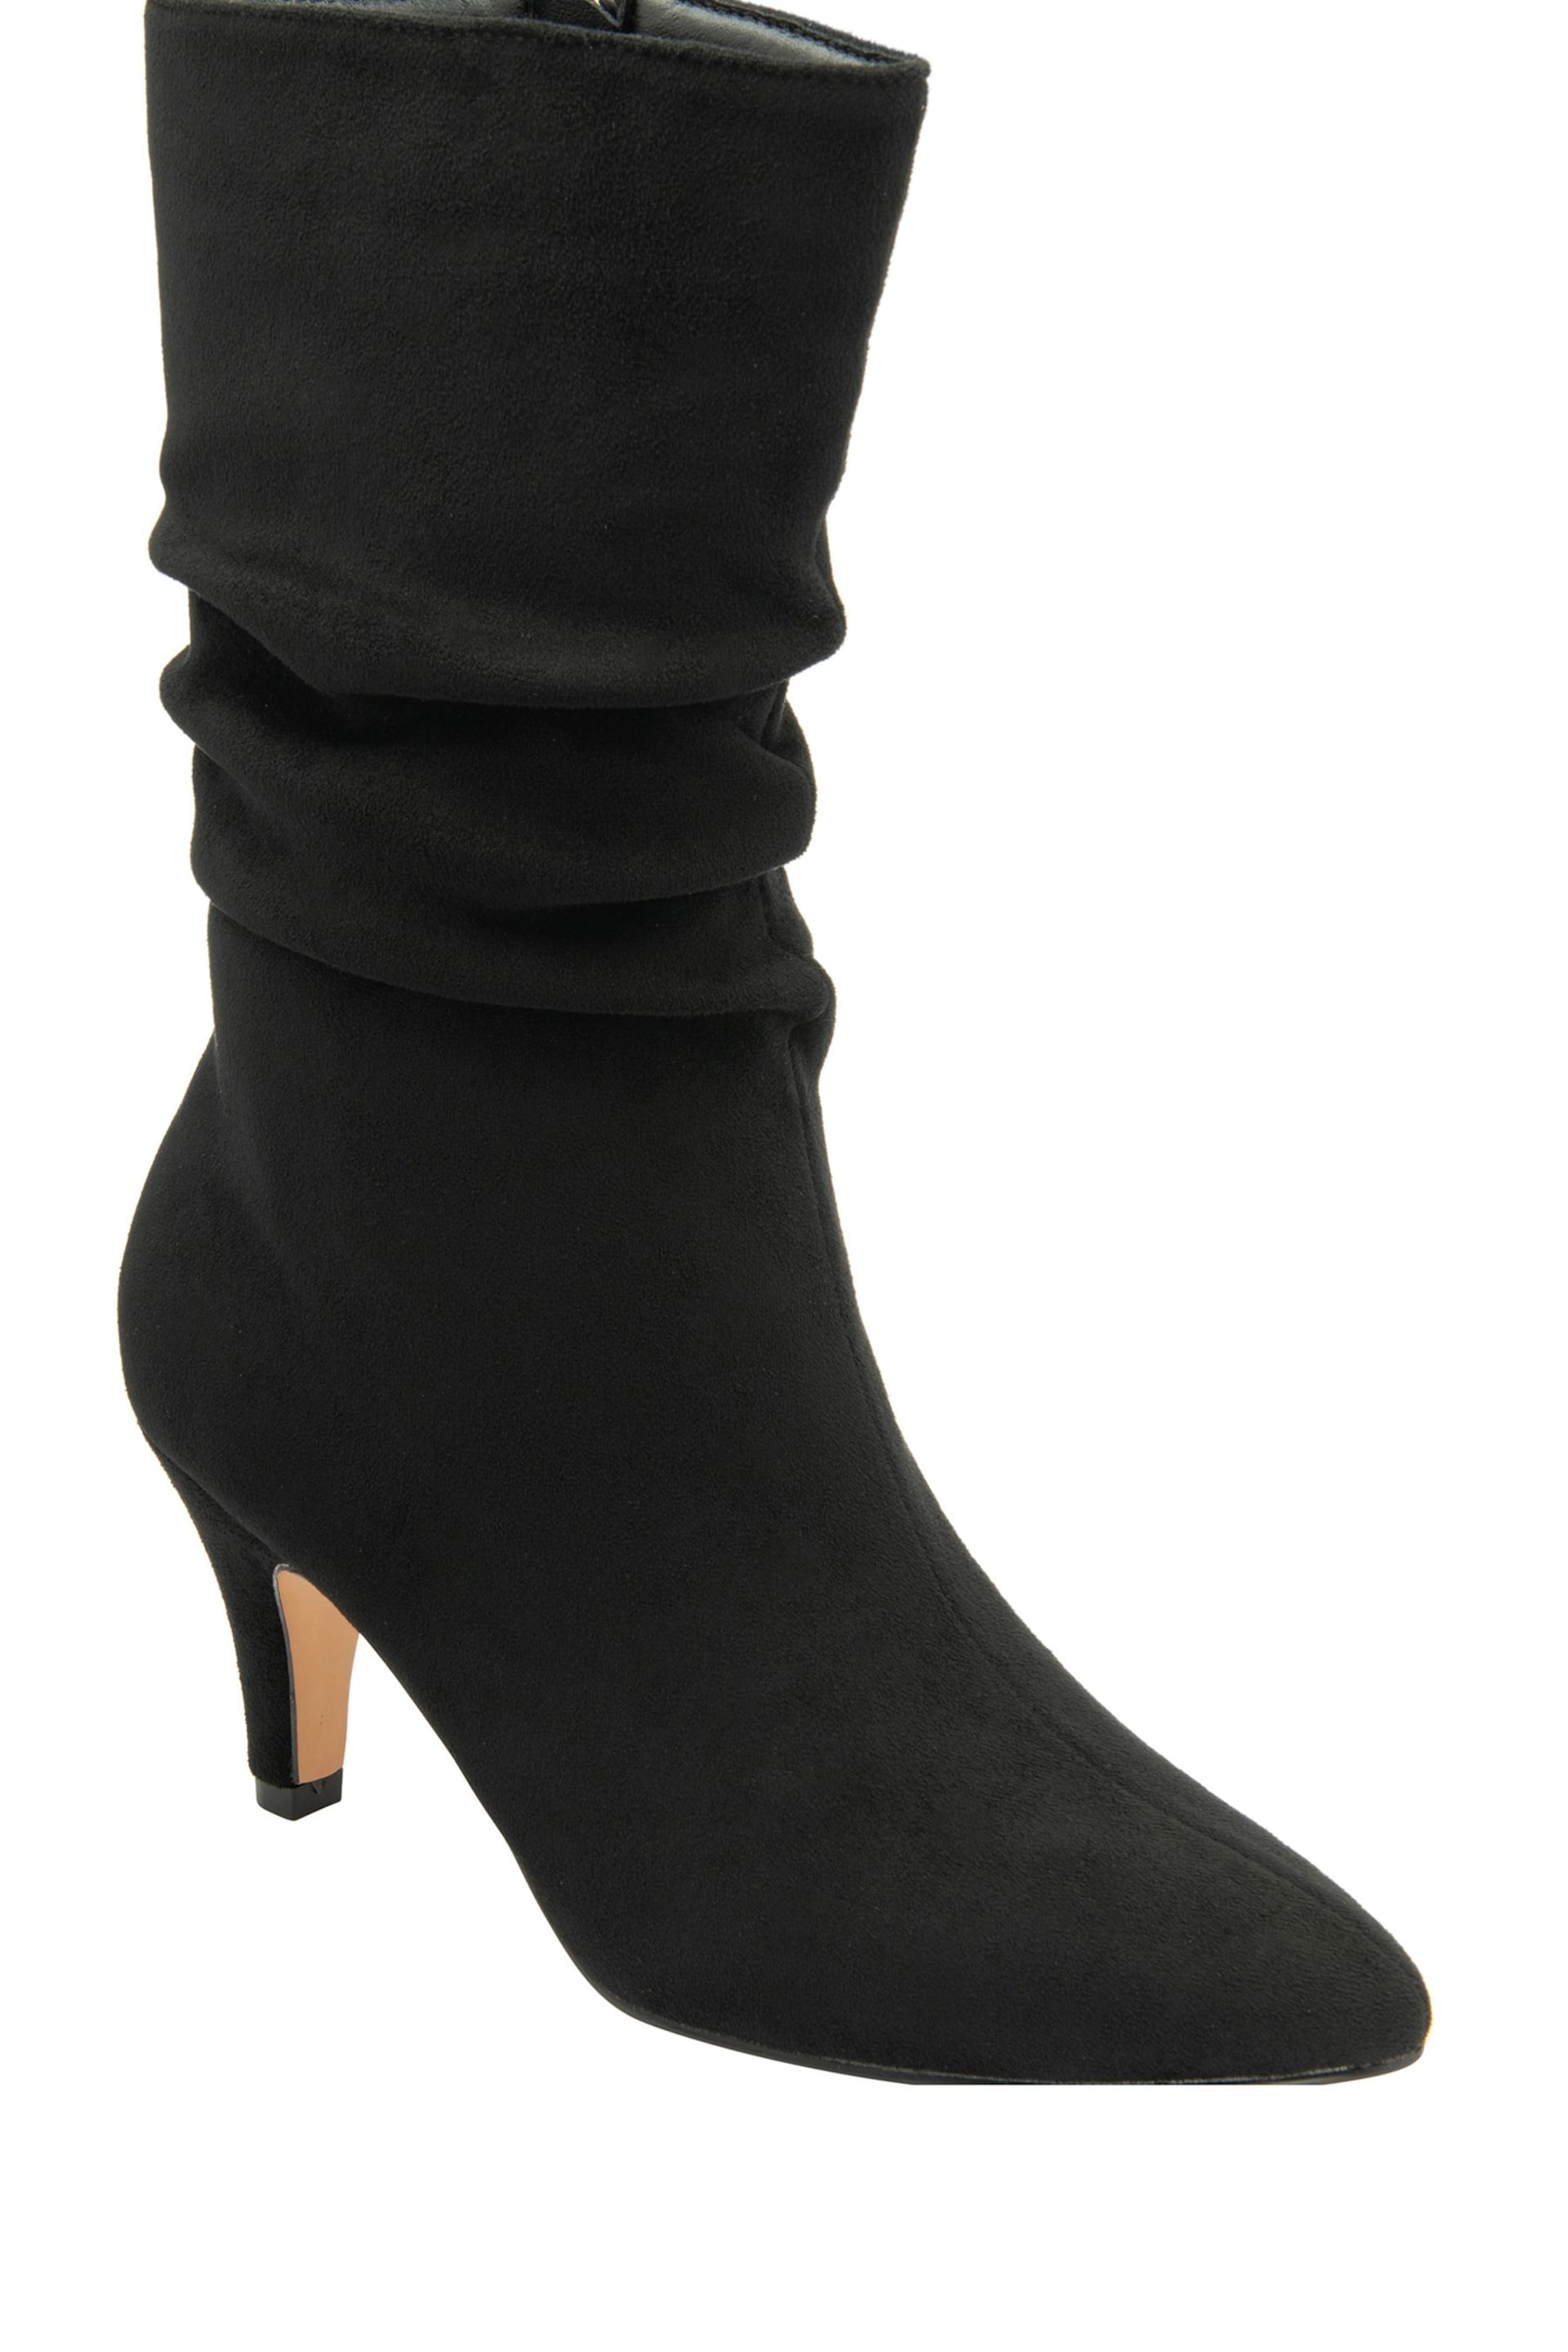 Lotus Dark Black Ankle Boots - Image 1 of 1